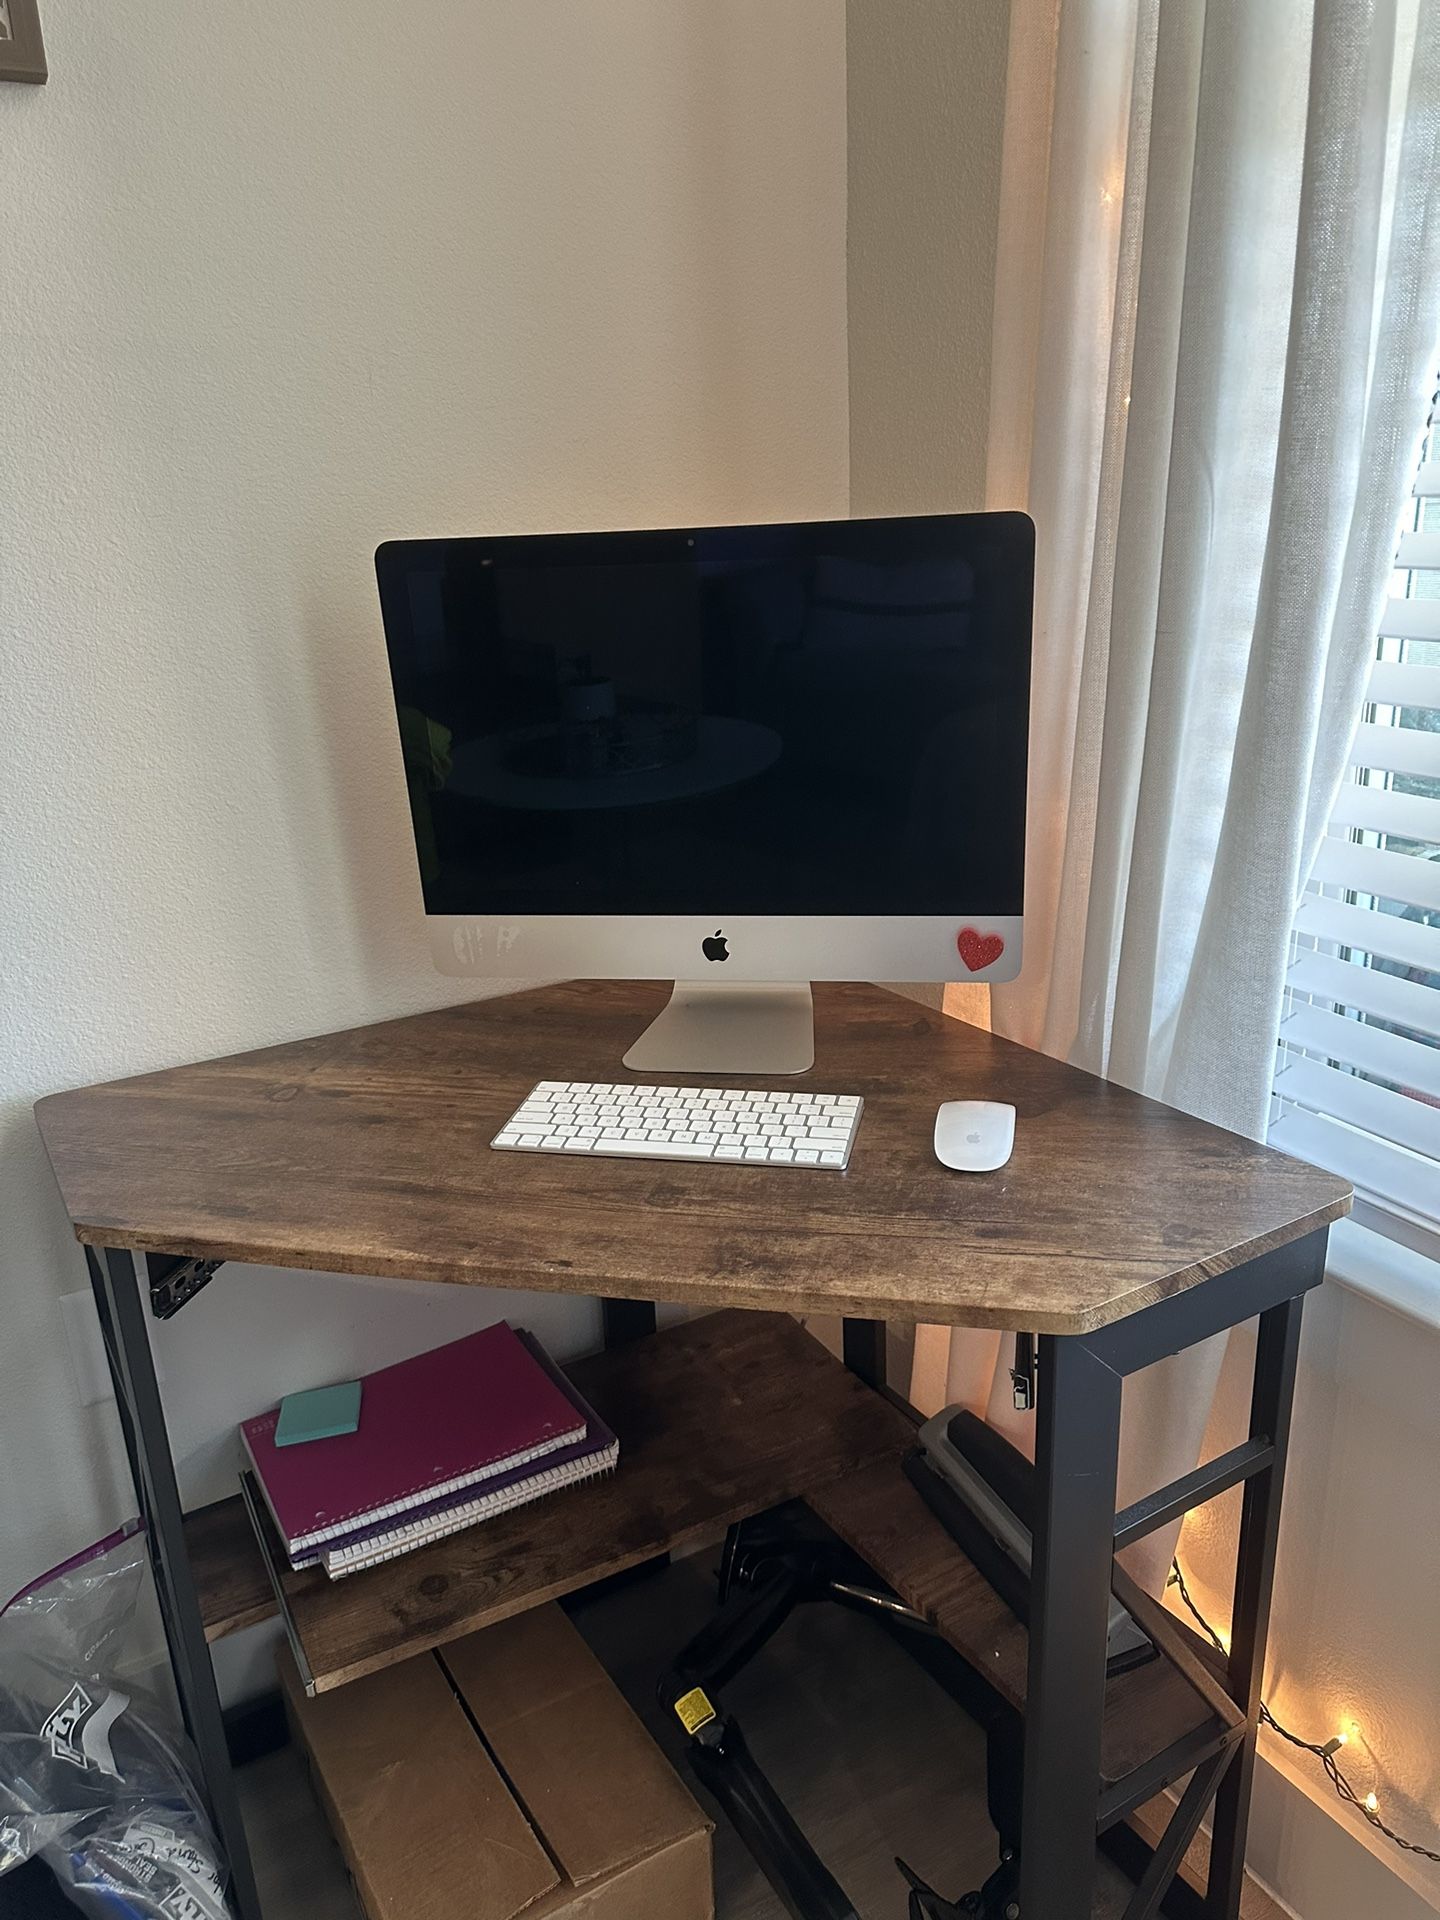 Mac Desktop 2019